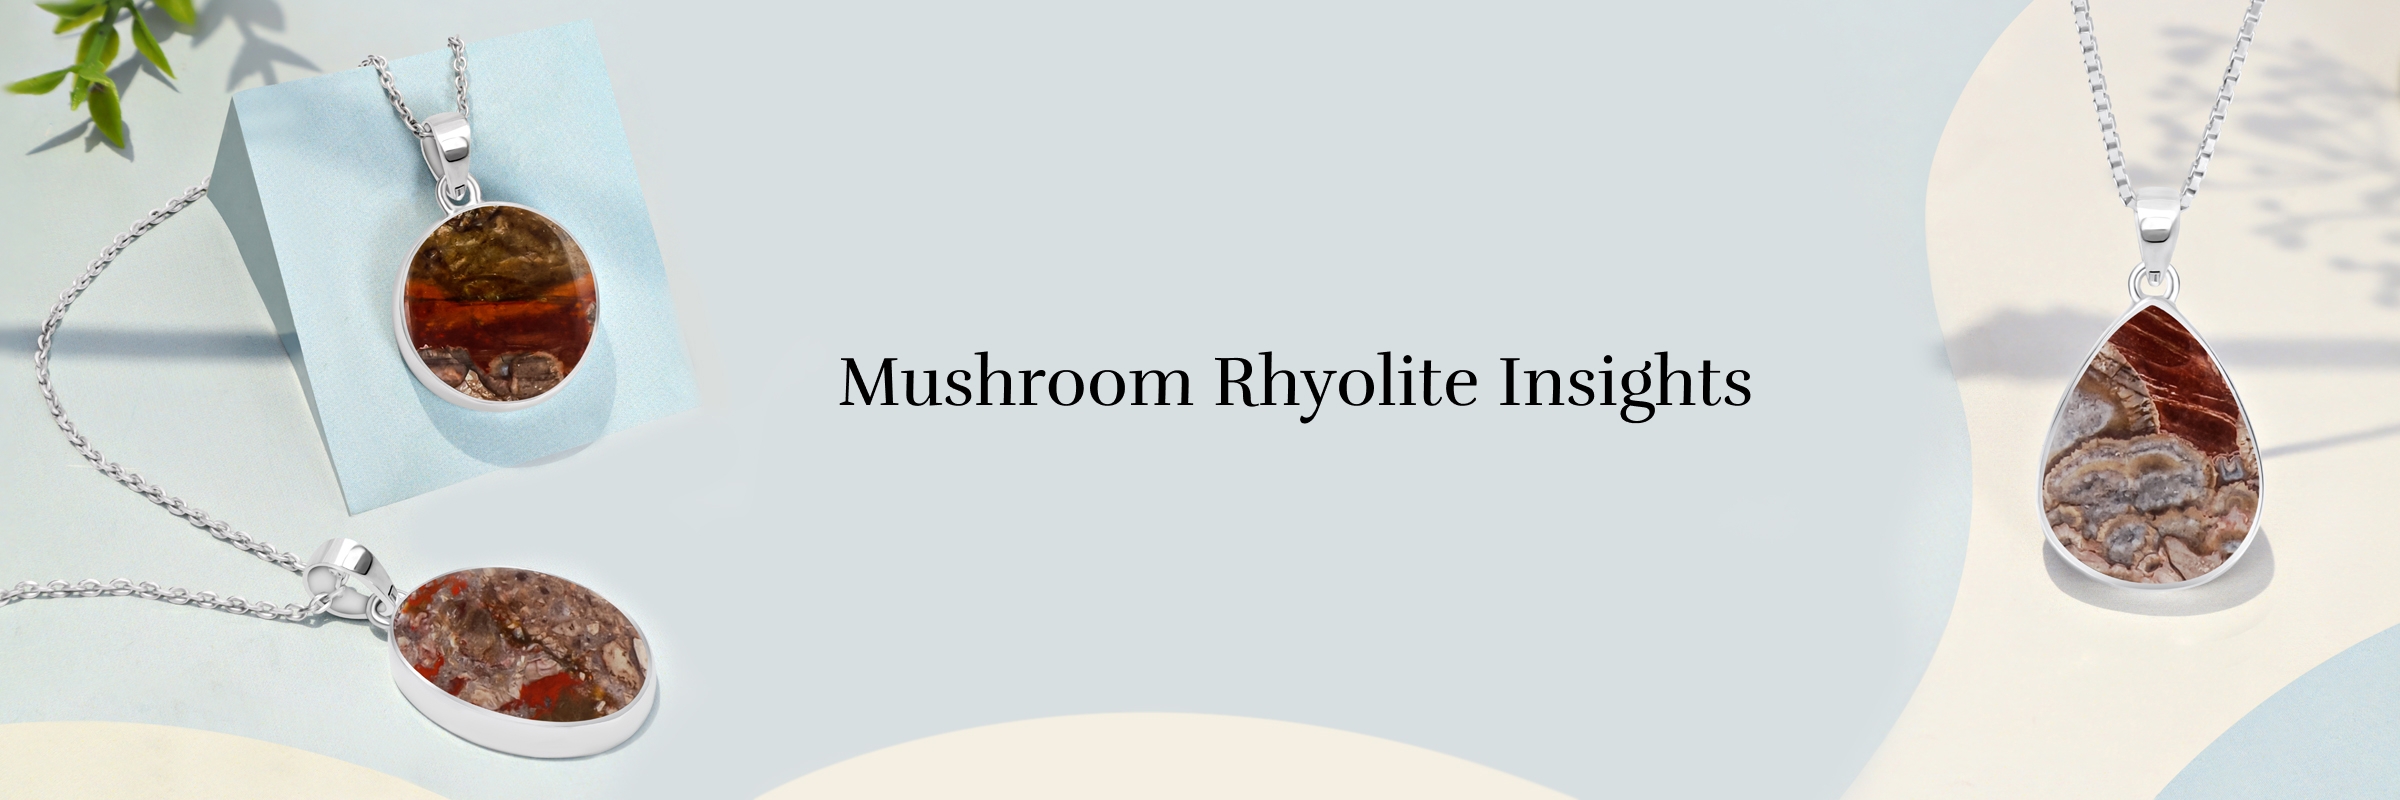 Mushroom Rhyolite Facts